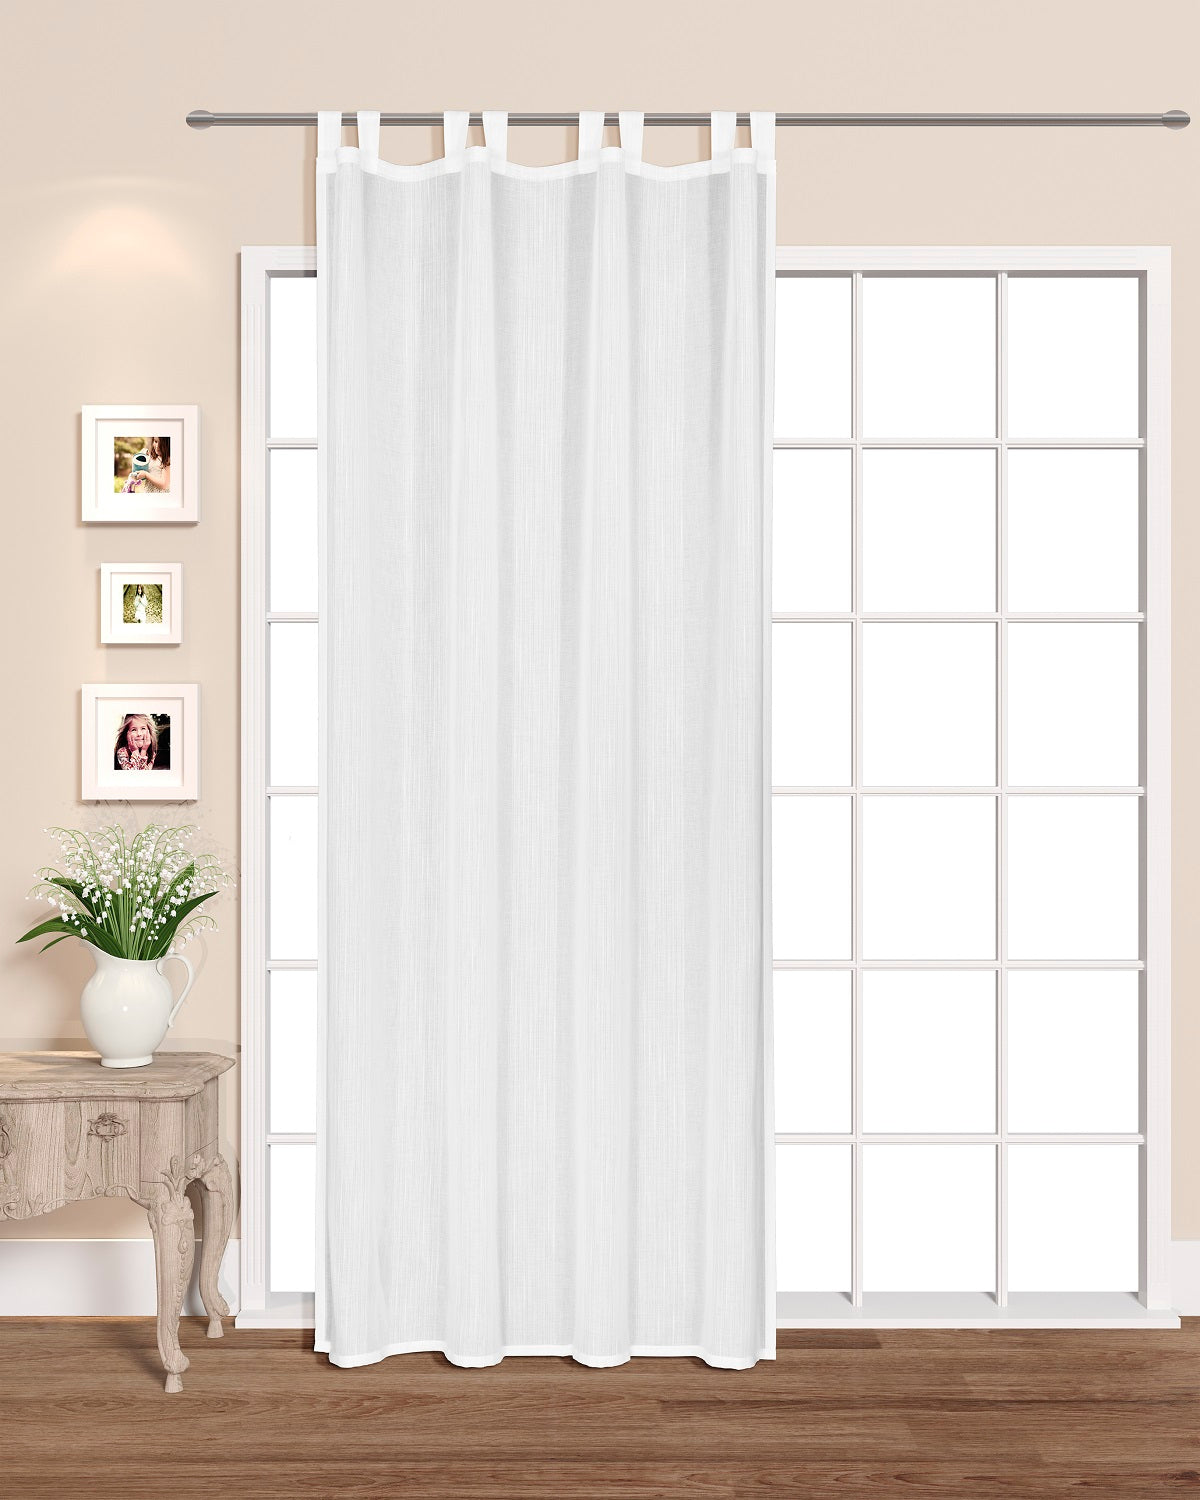 Day curtain white Kati